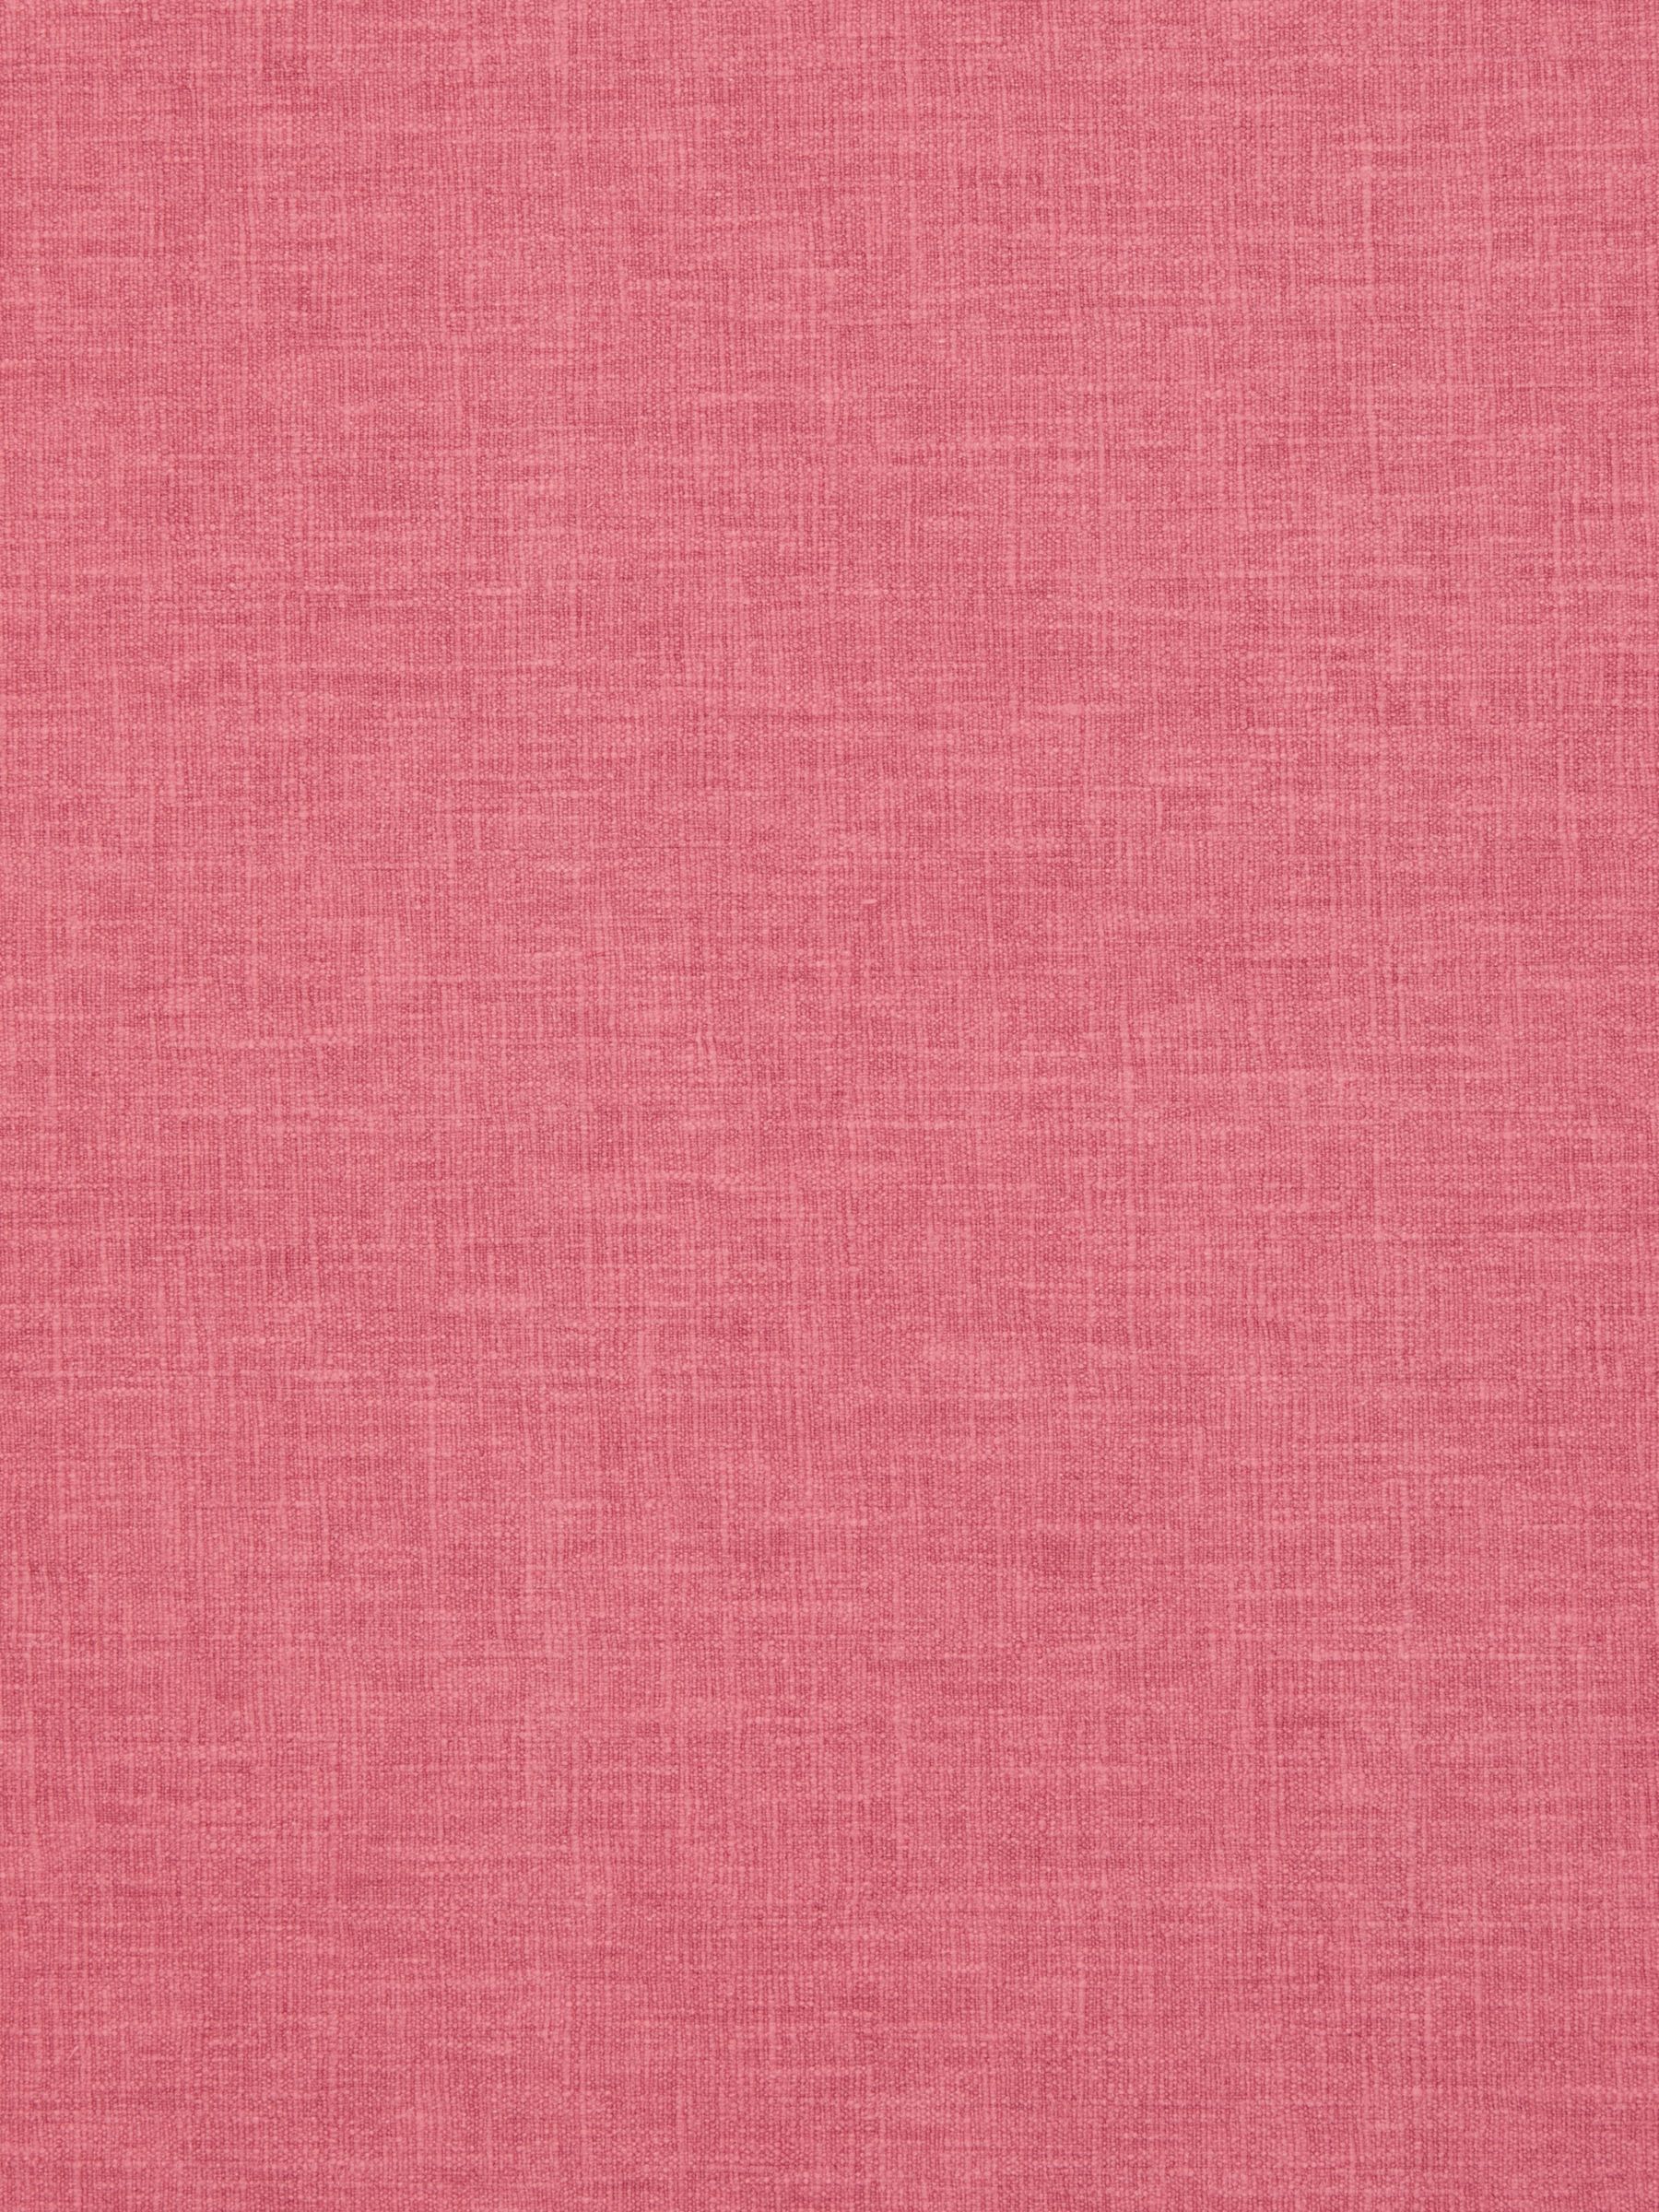 John Lewis Cotton Blend Furnishing Fabric, Cranberry